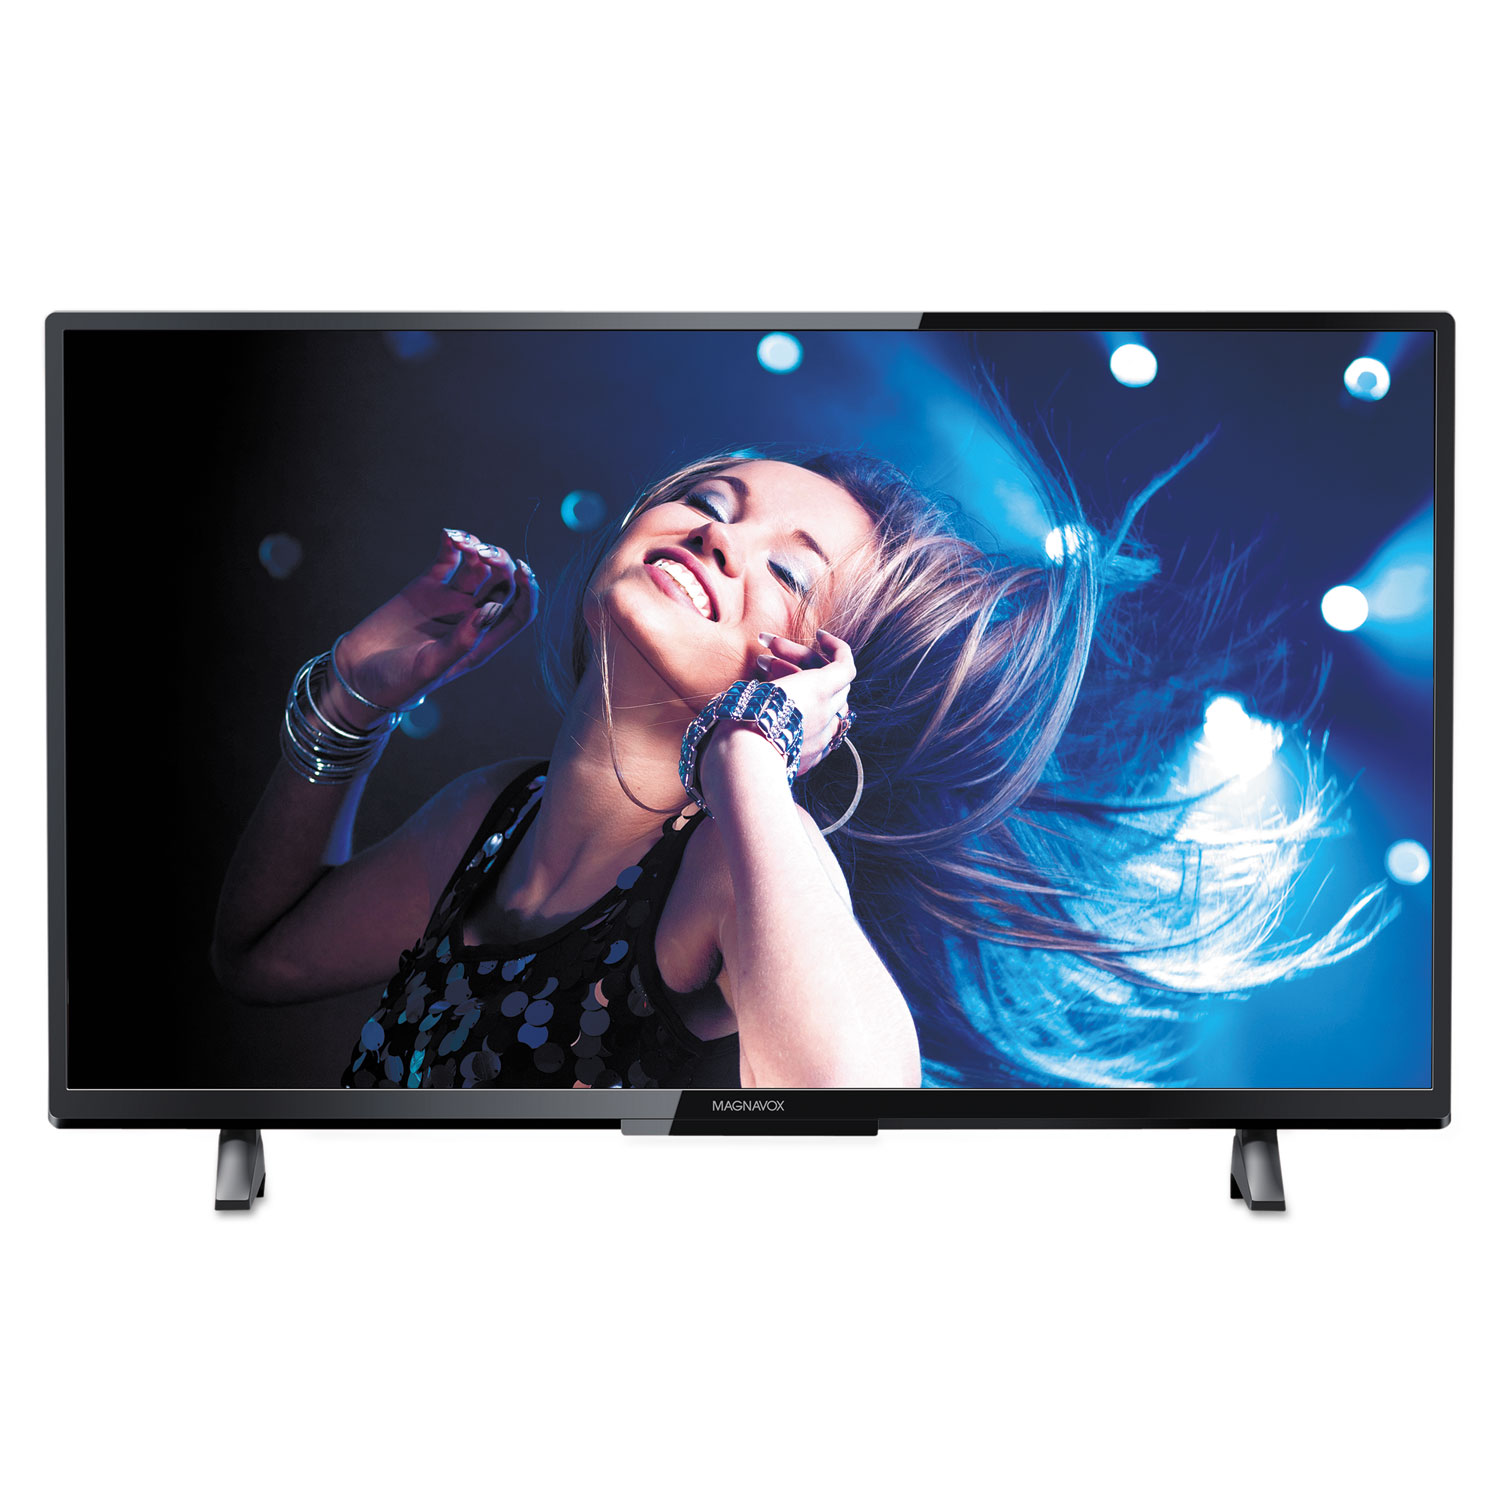 LED LCD SMART TV, 40, 1080p